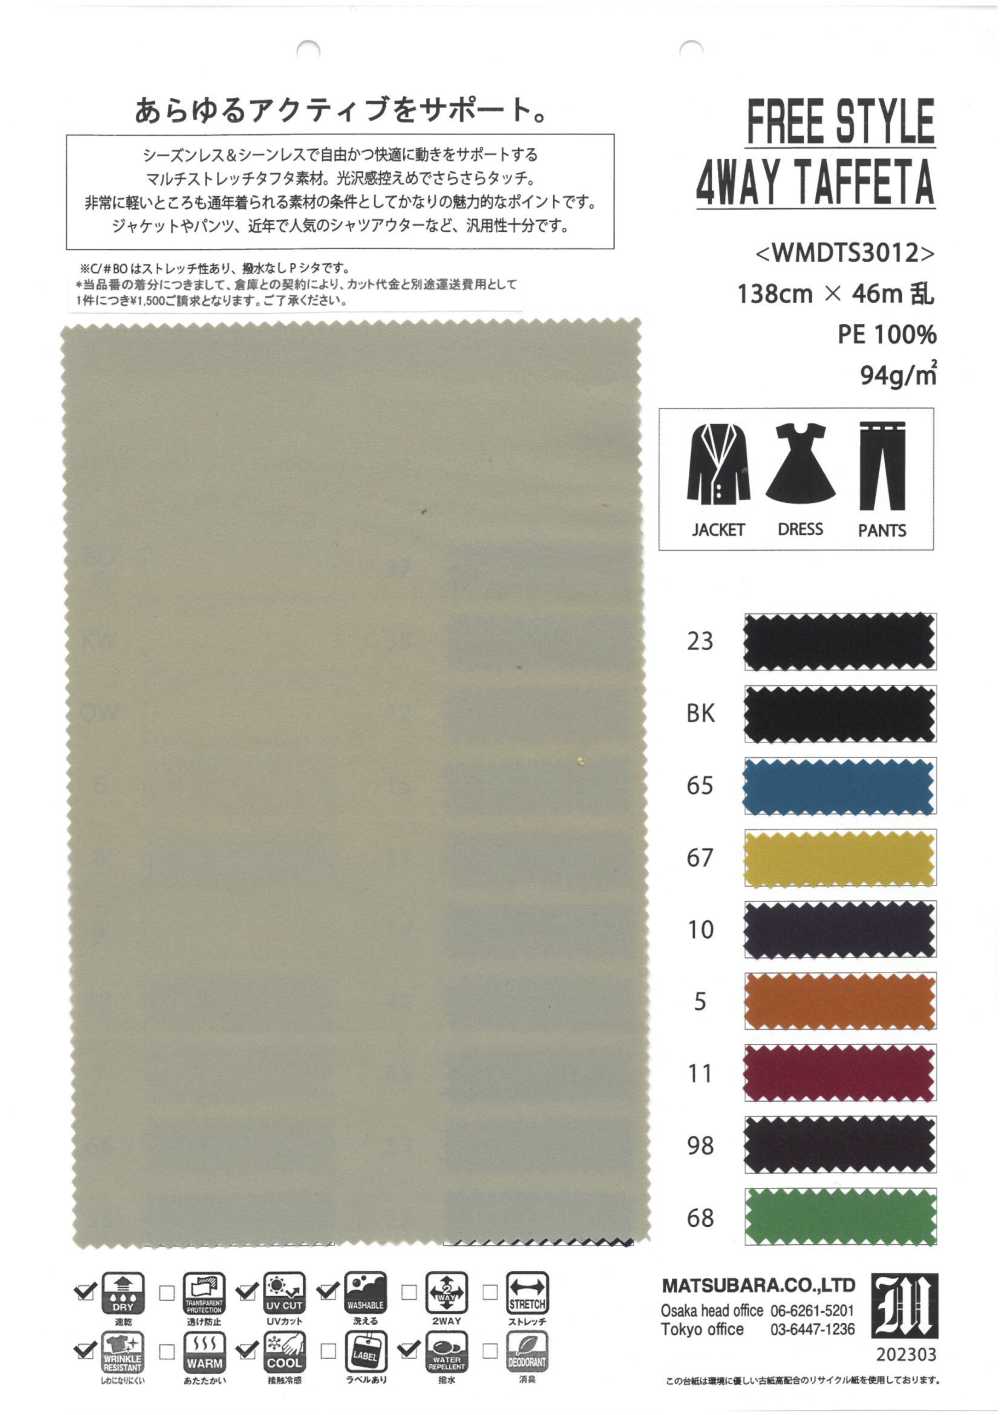 WMDTS3012 FREE STYLE AWAY TAFFETA[Textilgewebe] Matsubara